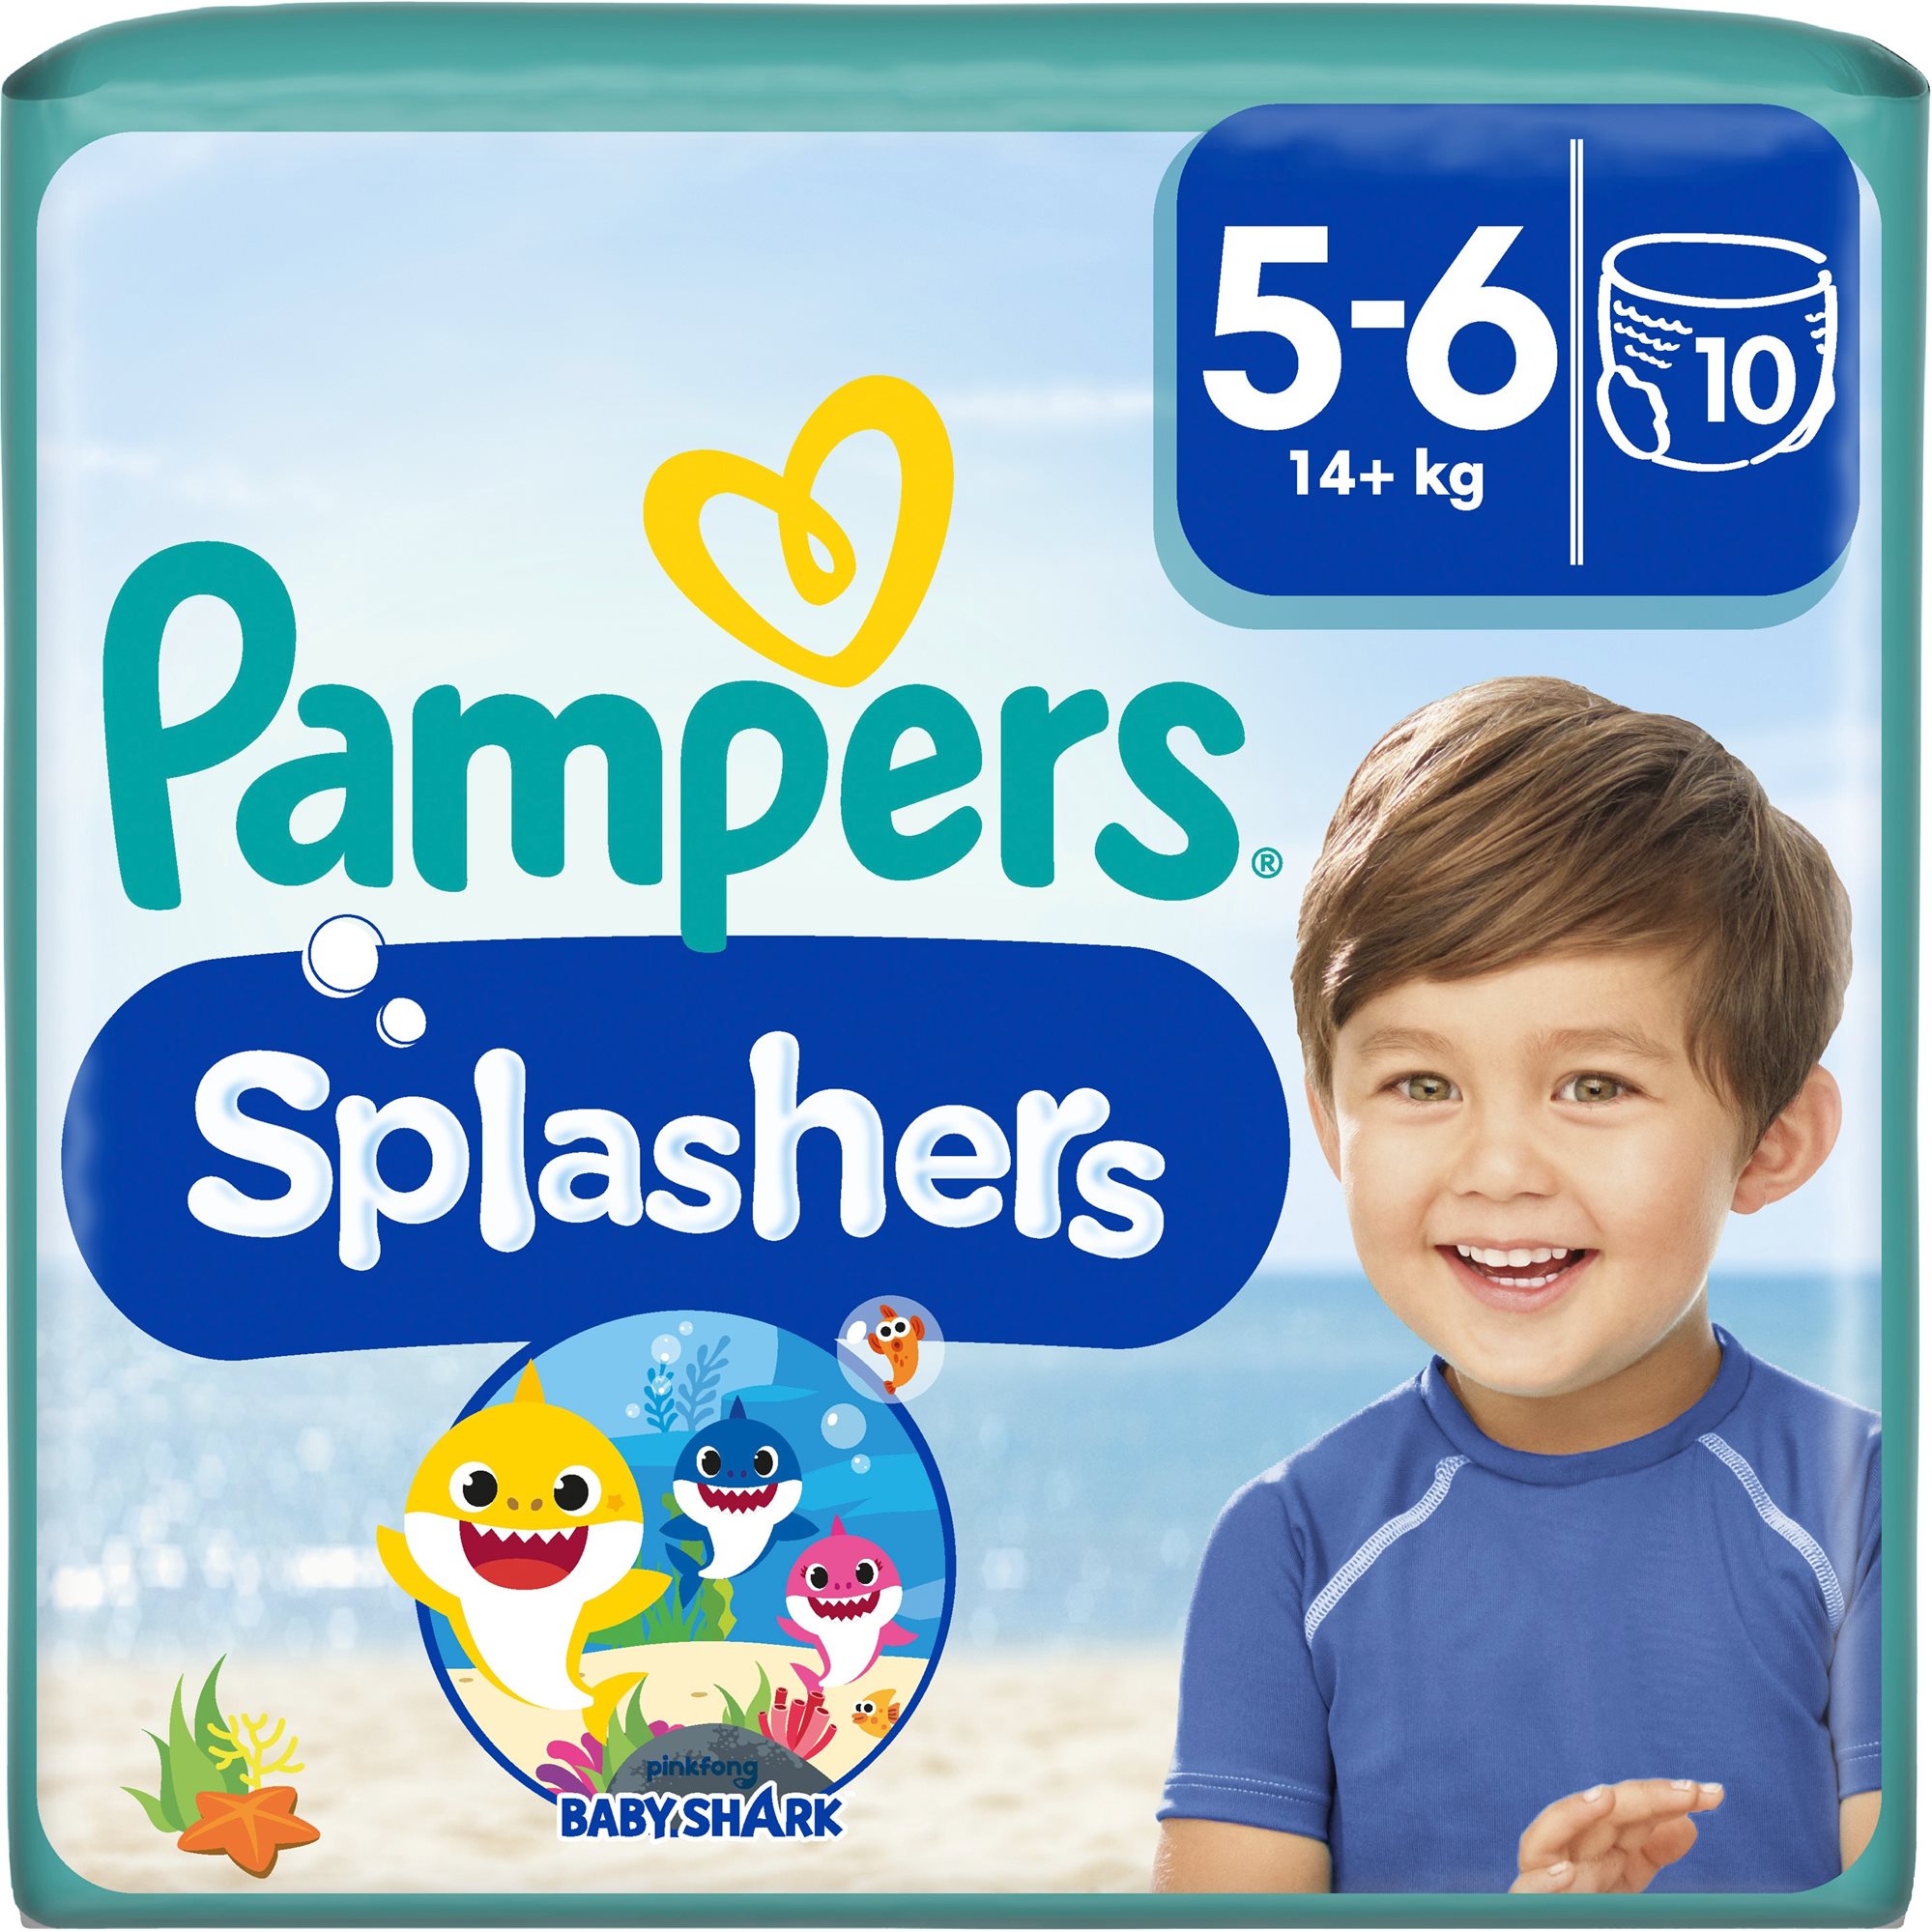 PAMPERS Splasher 5/6 (14+ kg), 10 db